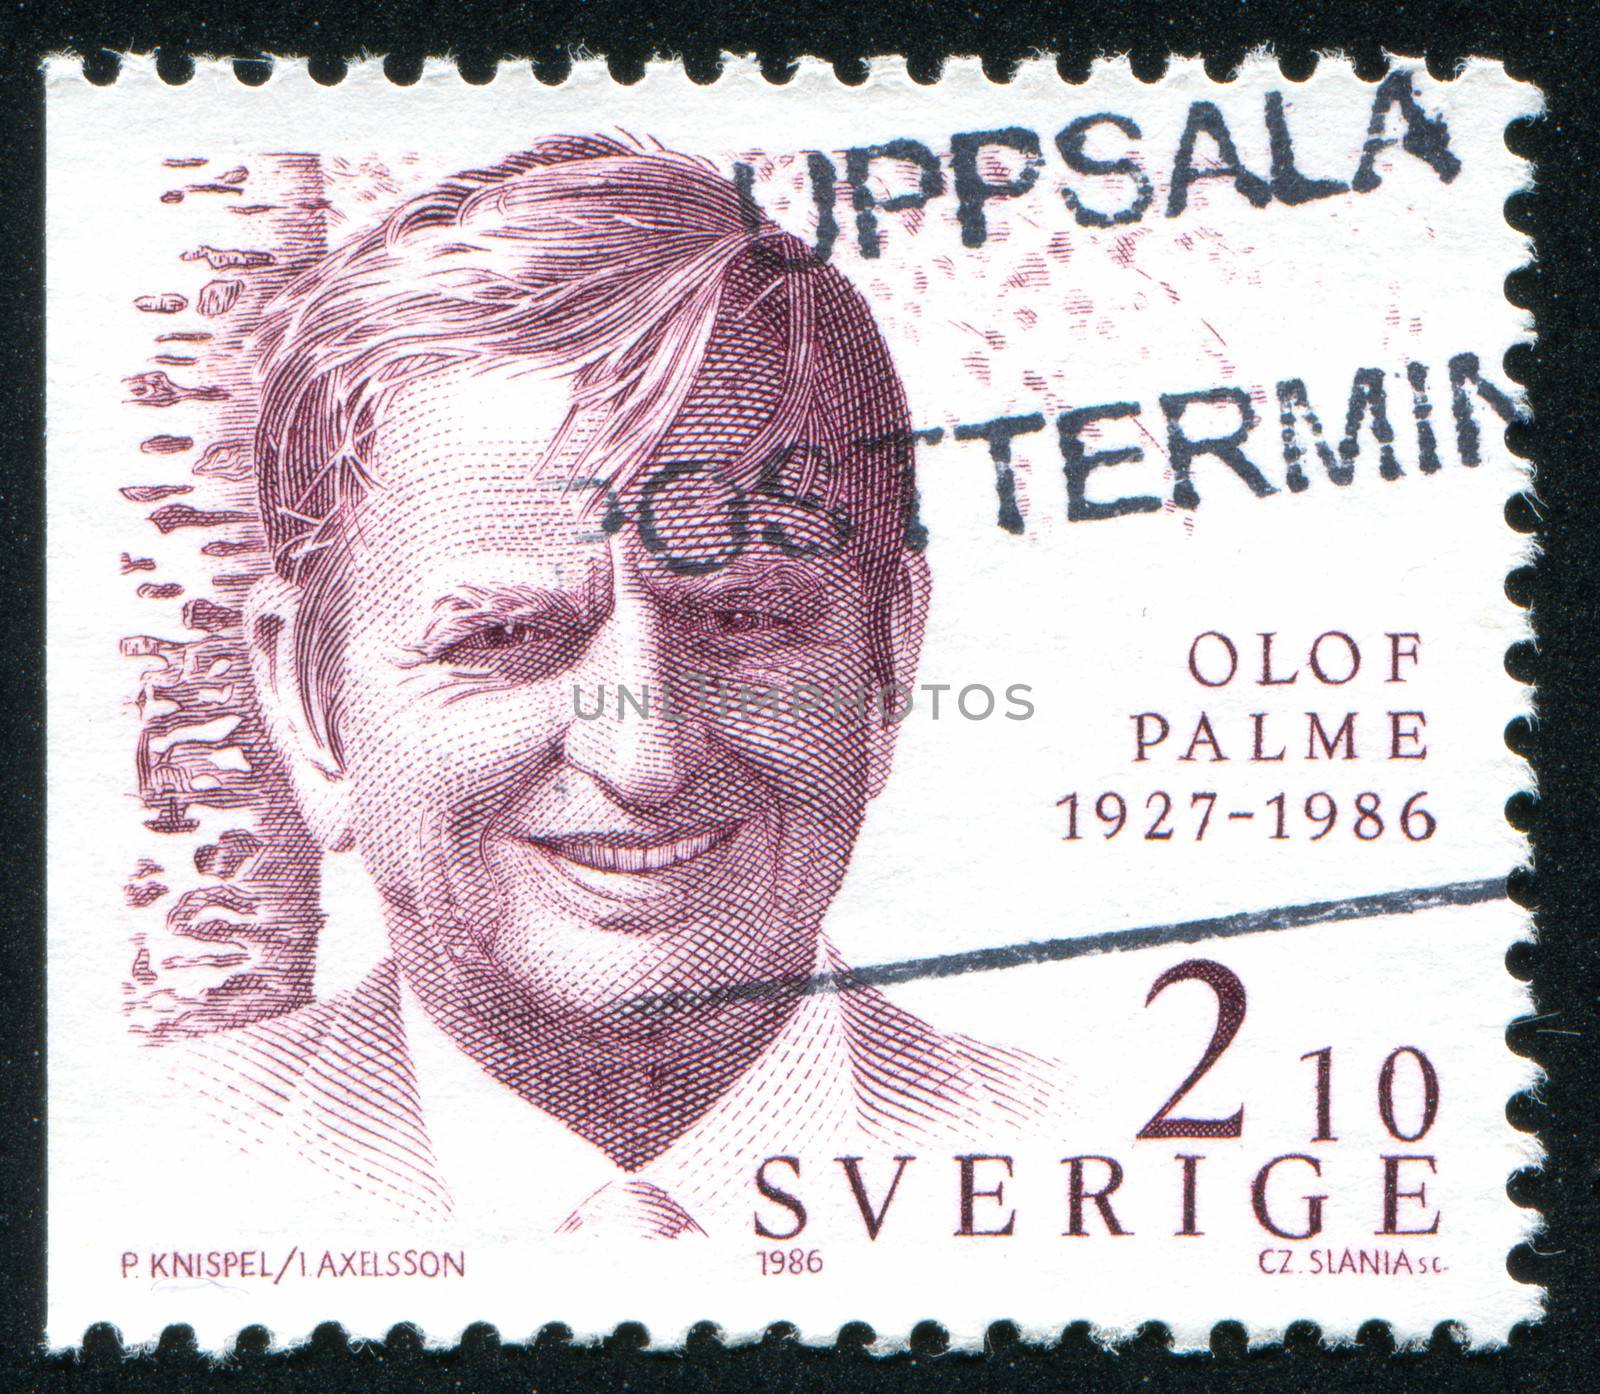 Olof Palme by rook